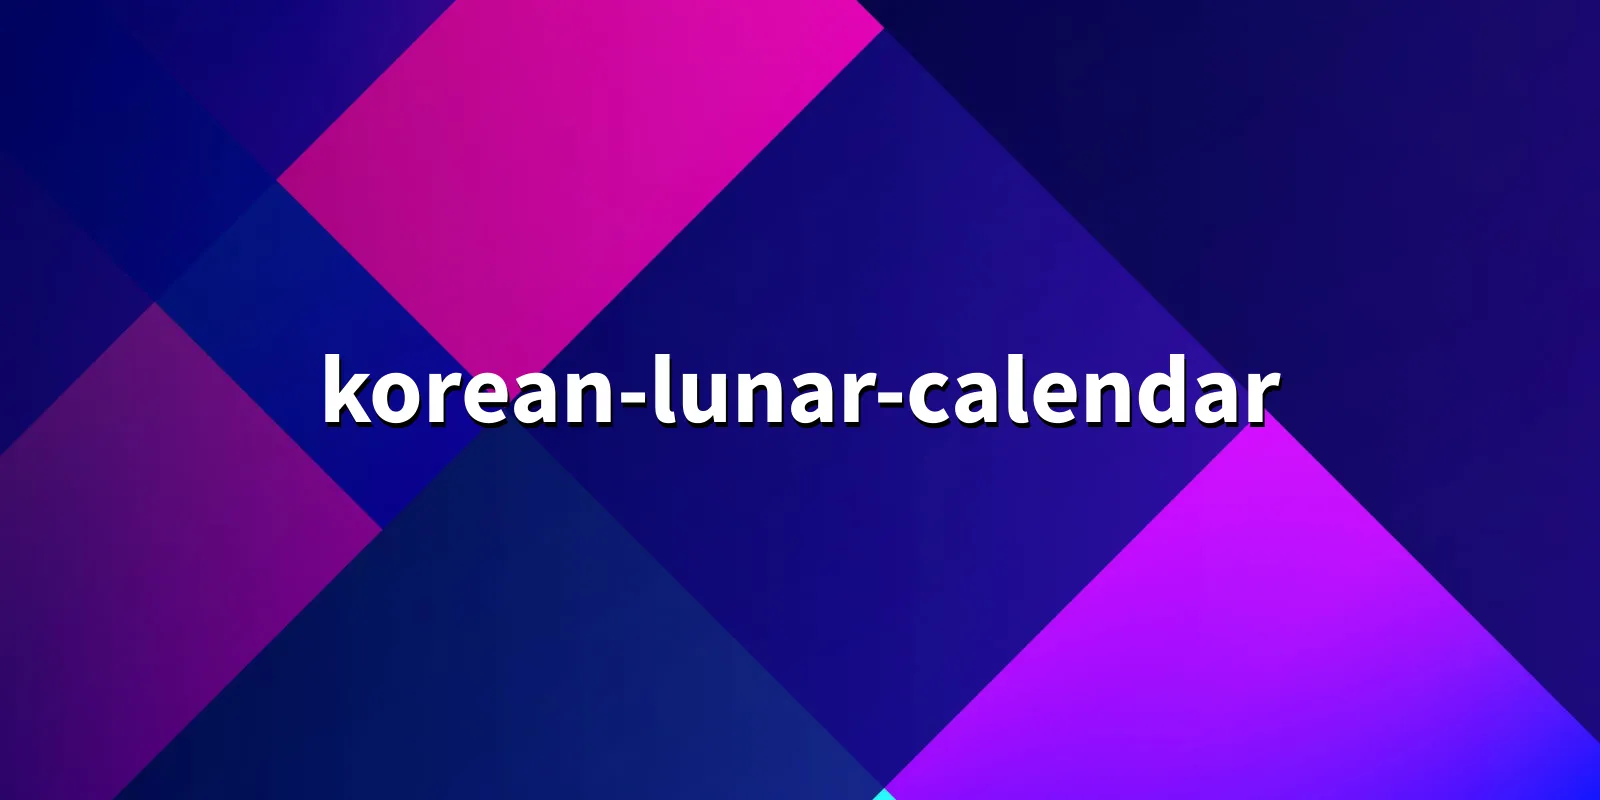 koreanlunarcalendar 0.3.1 Korean Lunar Calendar